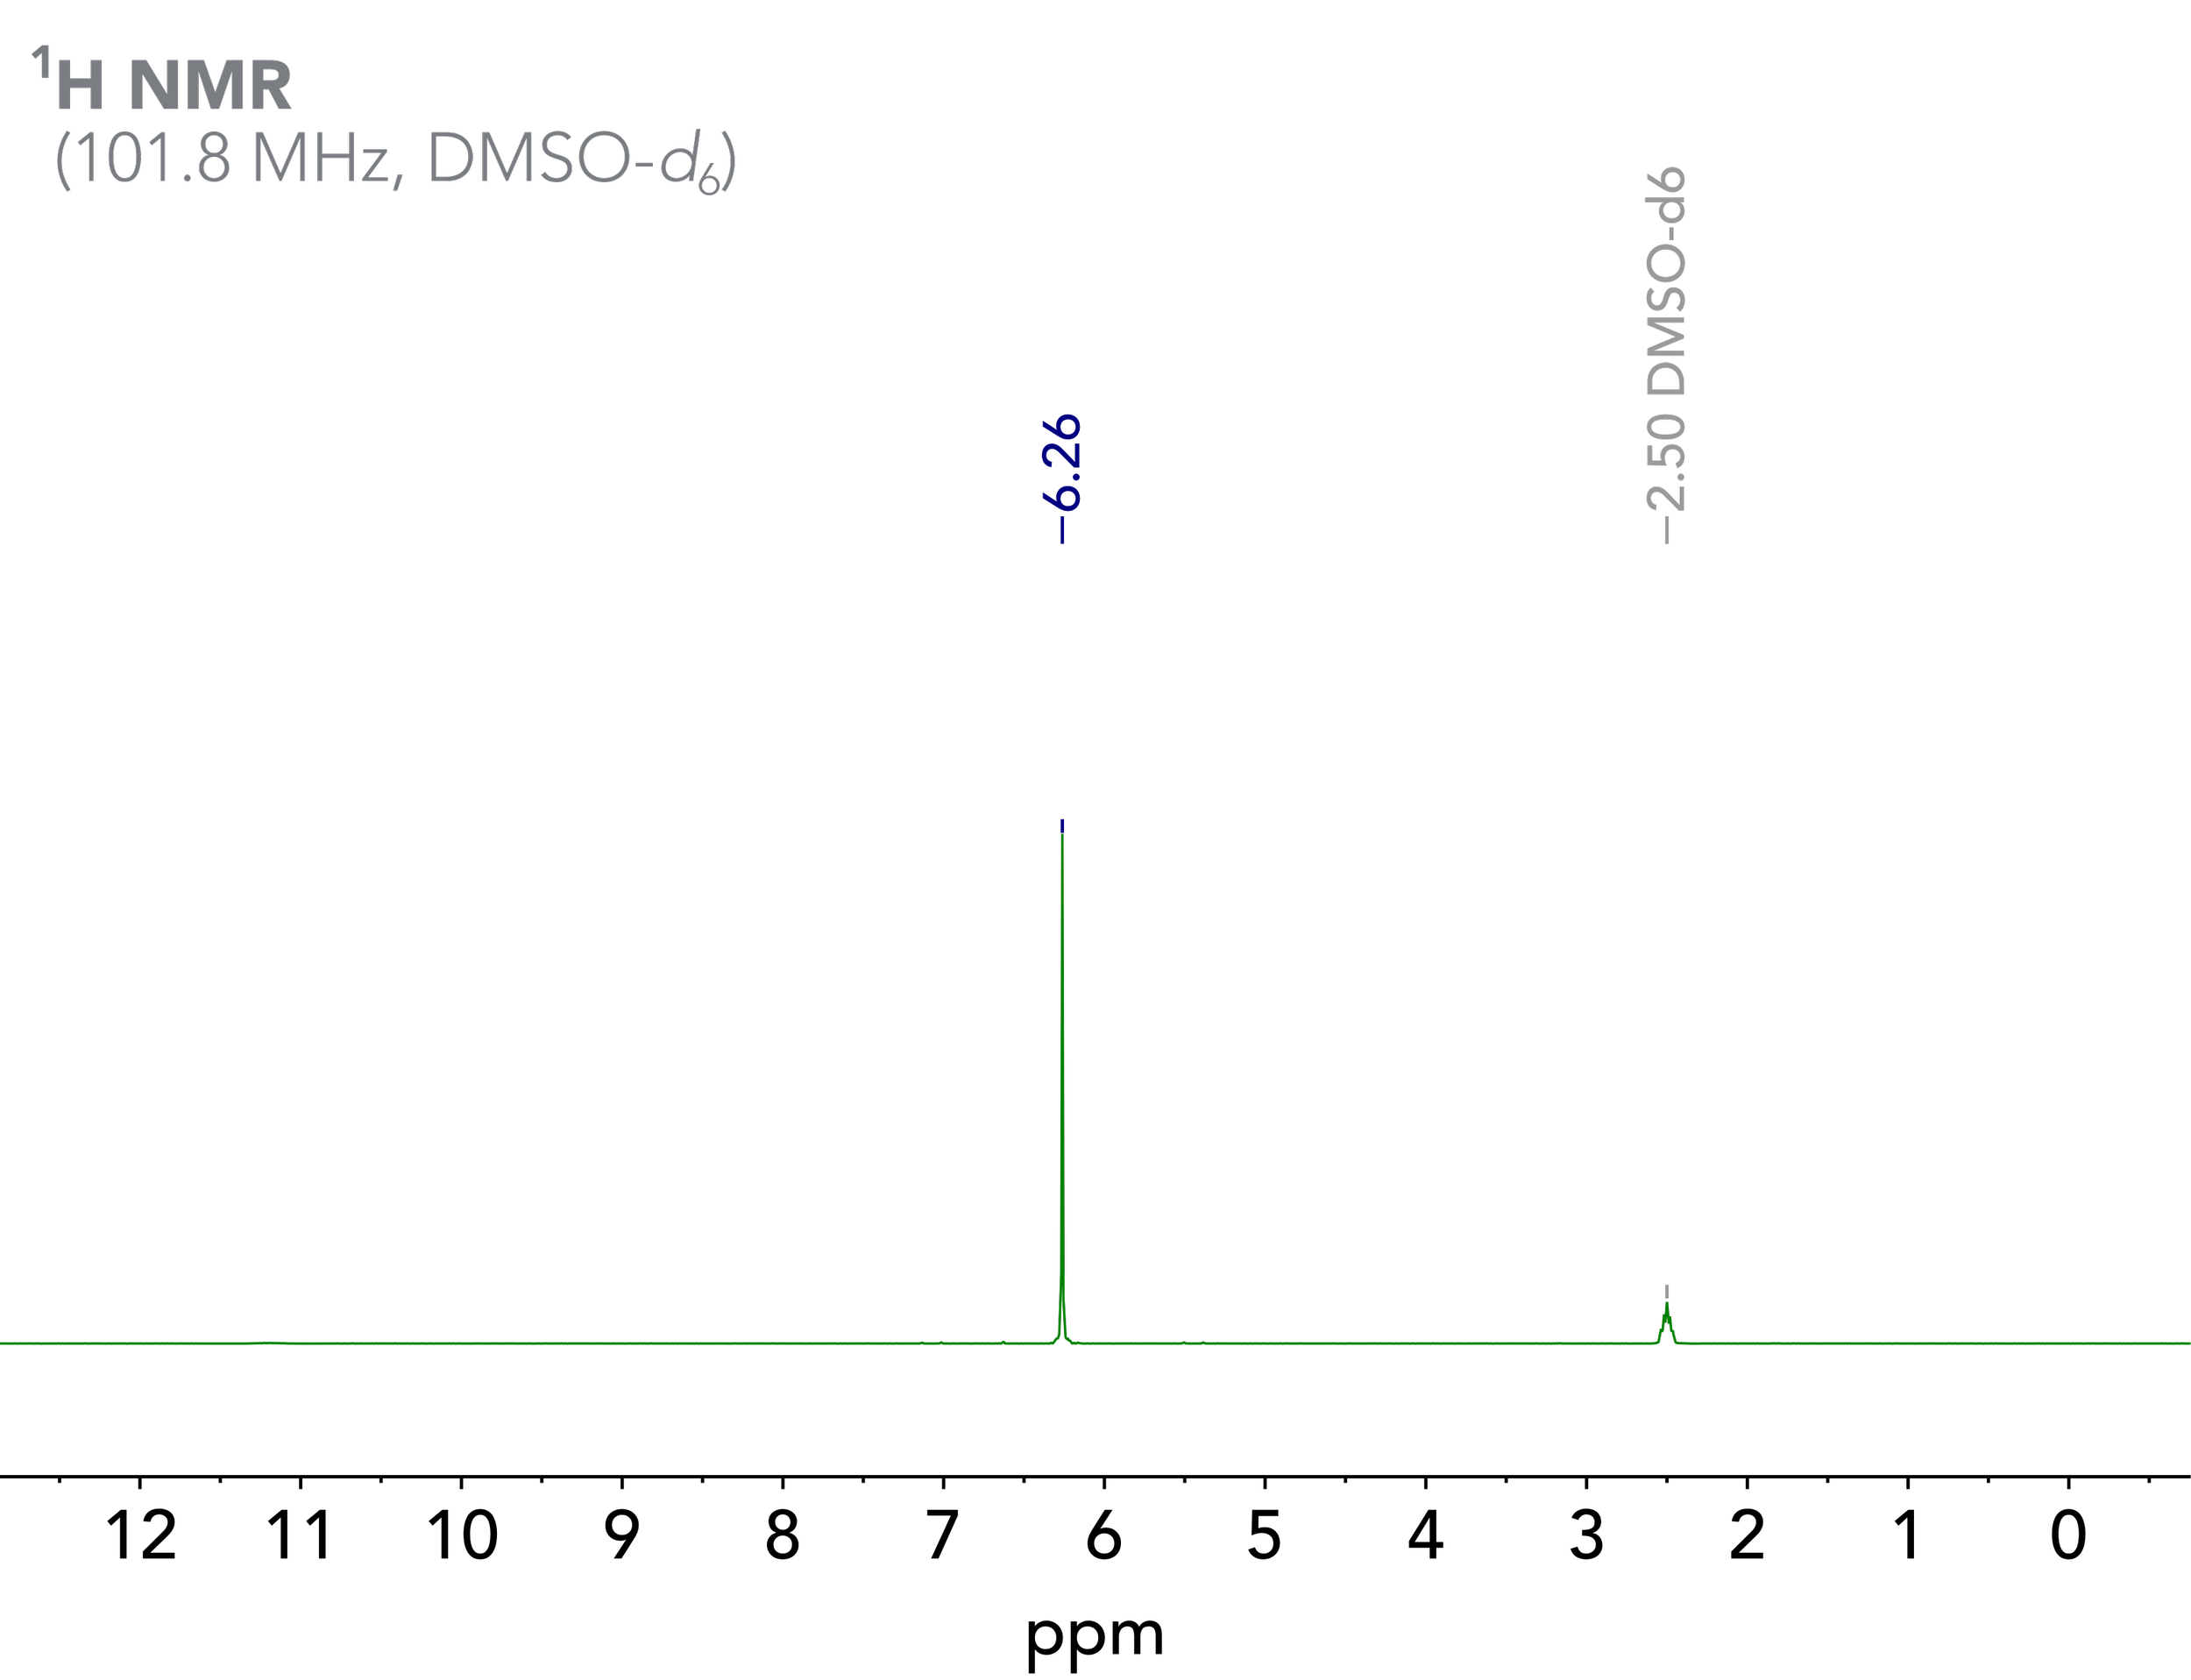 100 MHz 1H NMR spectrum of maleic acid in DMSO-d6.